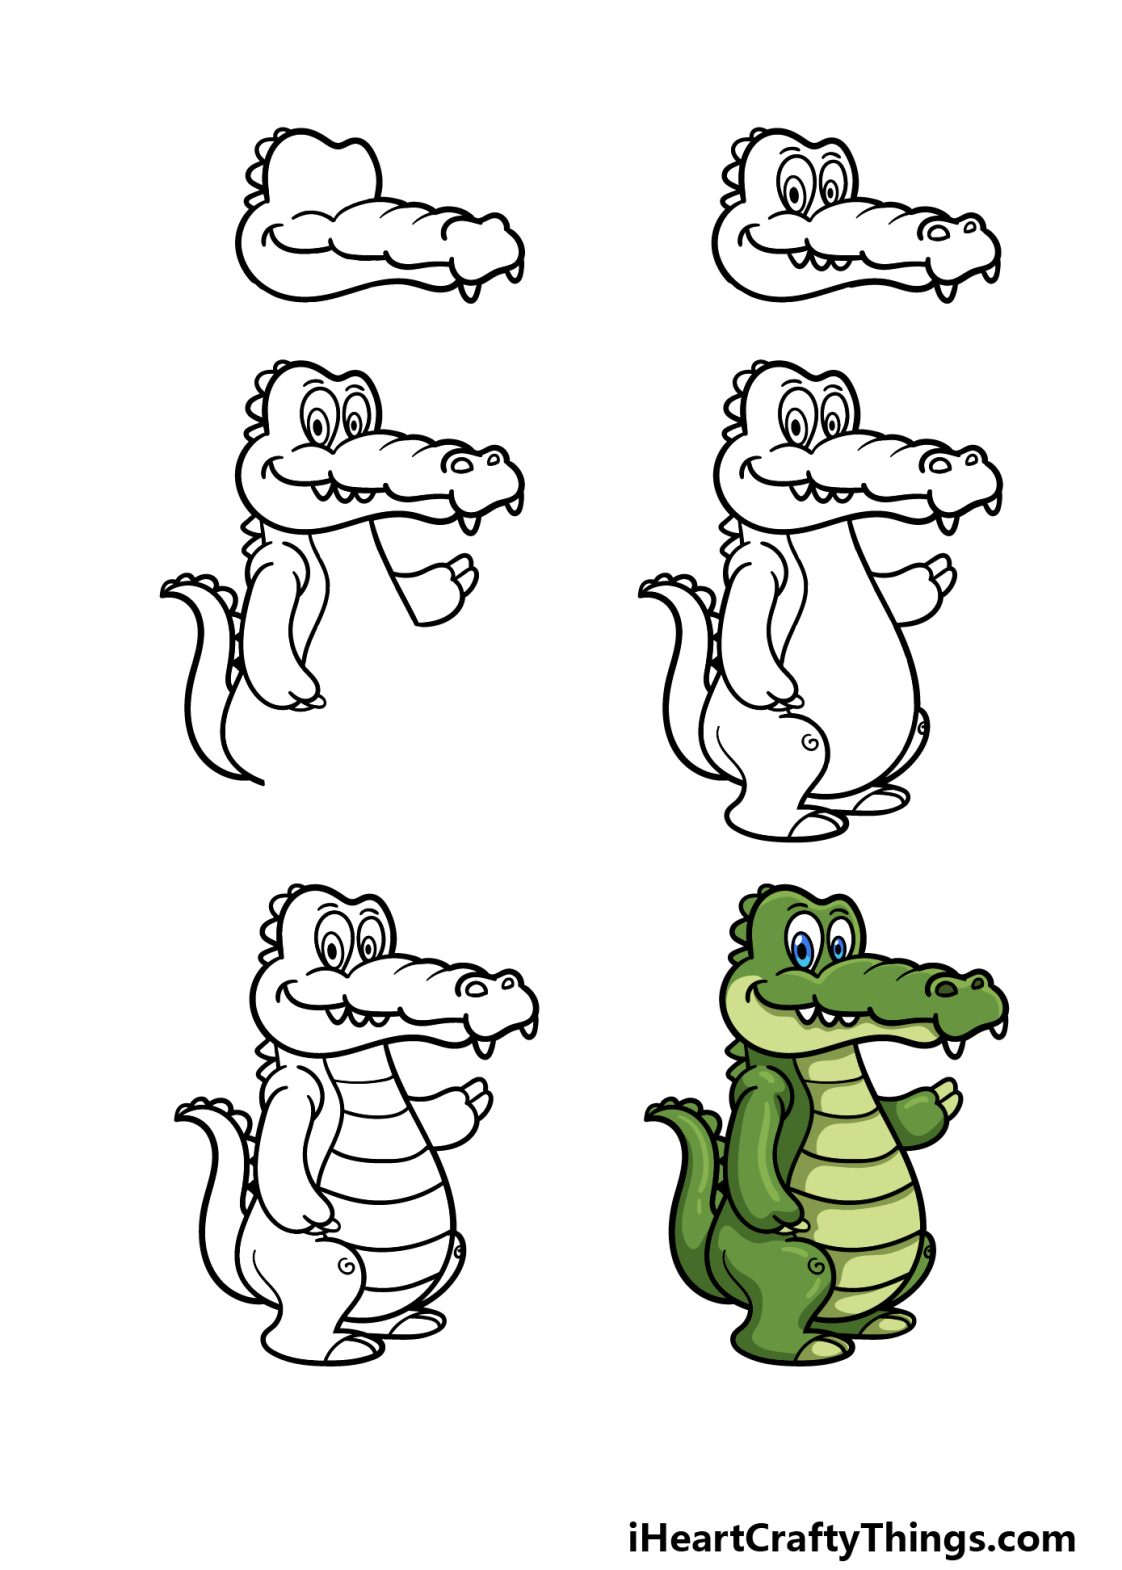 Cartoon Alligator Drawing How To Draw A Cartoon Alligator Step By Step!